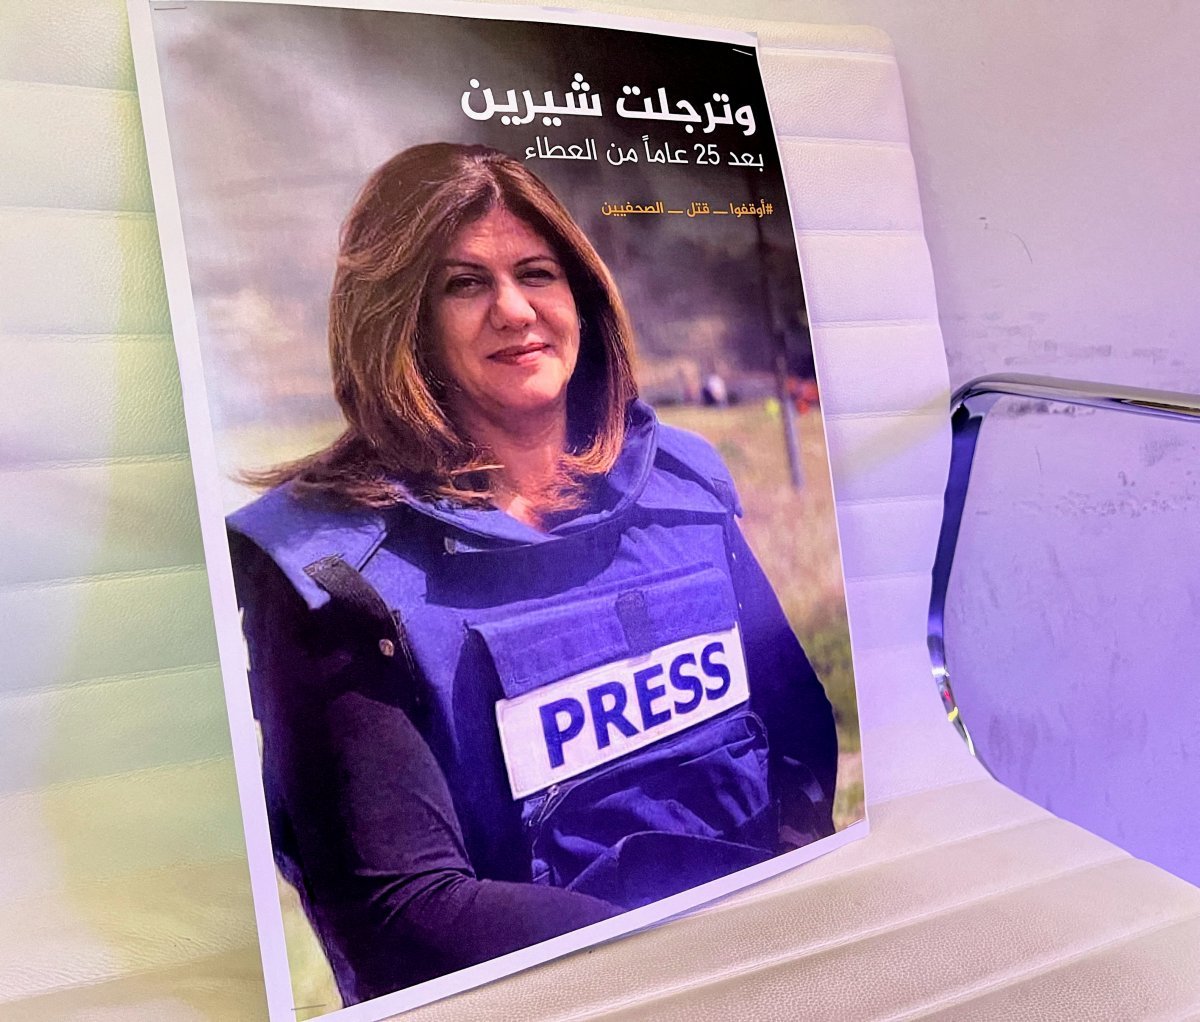 USA: Israel probably shot Palestinian journalist Shirin Abu Akile #4